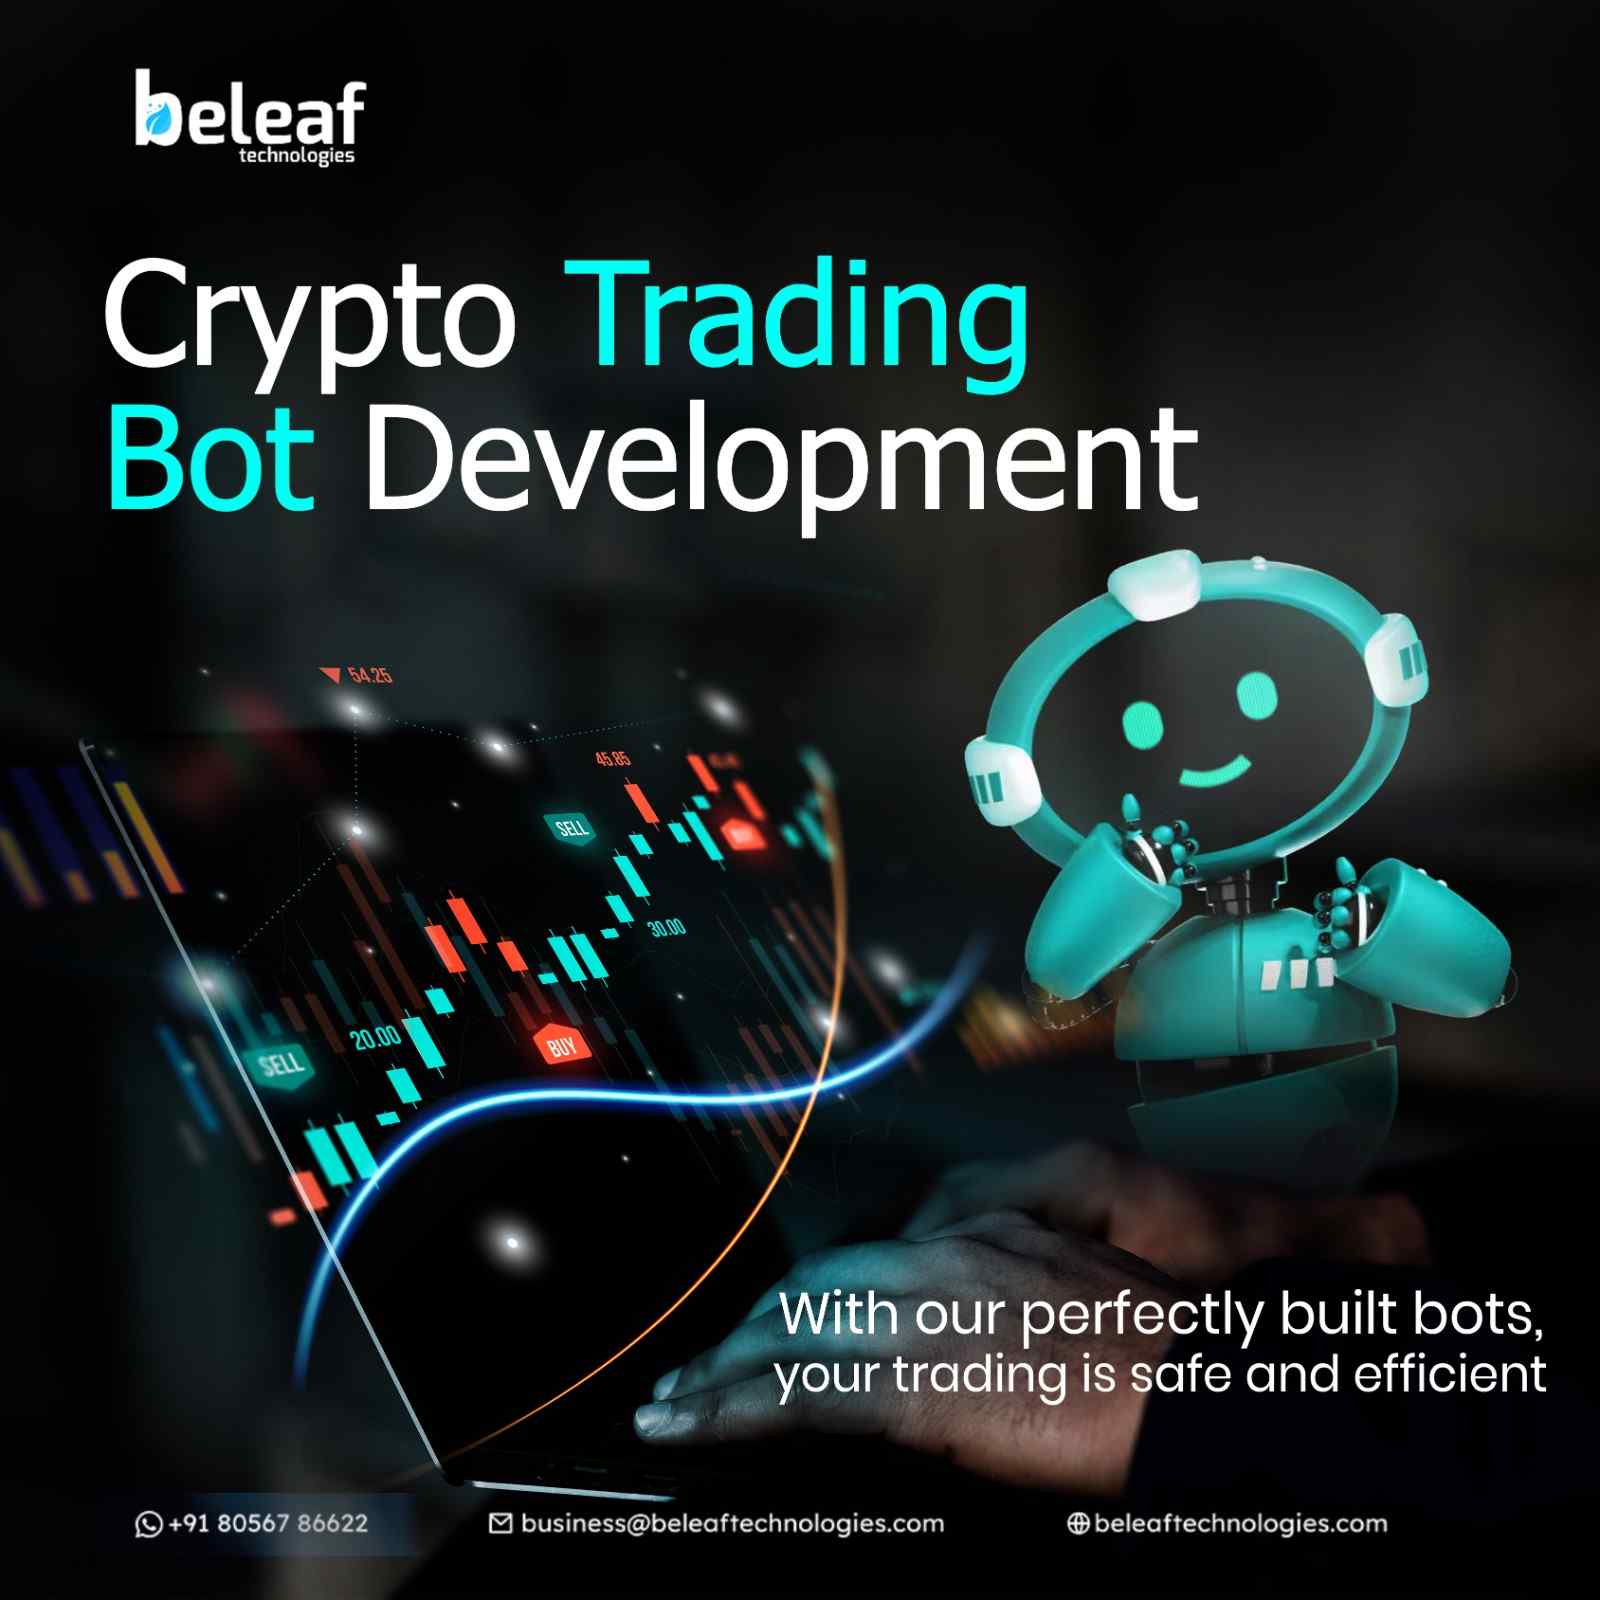 telegram crypto trading bot development company,Kanadukattan,Services,Free Classifieds,Post Free Ads,77traders.com